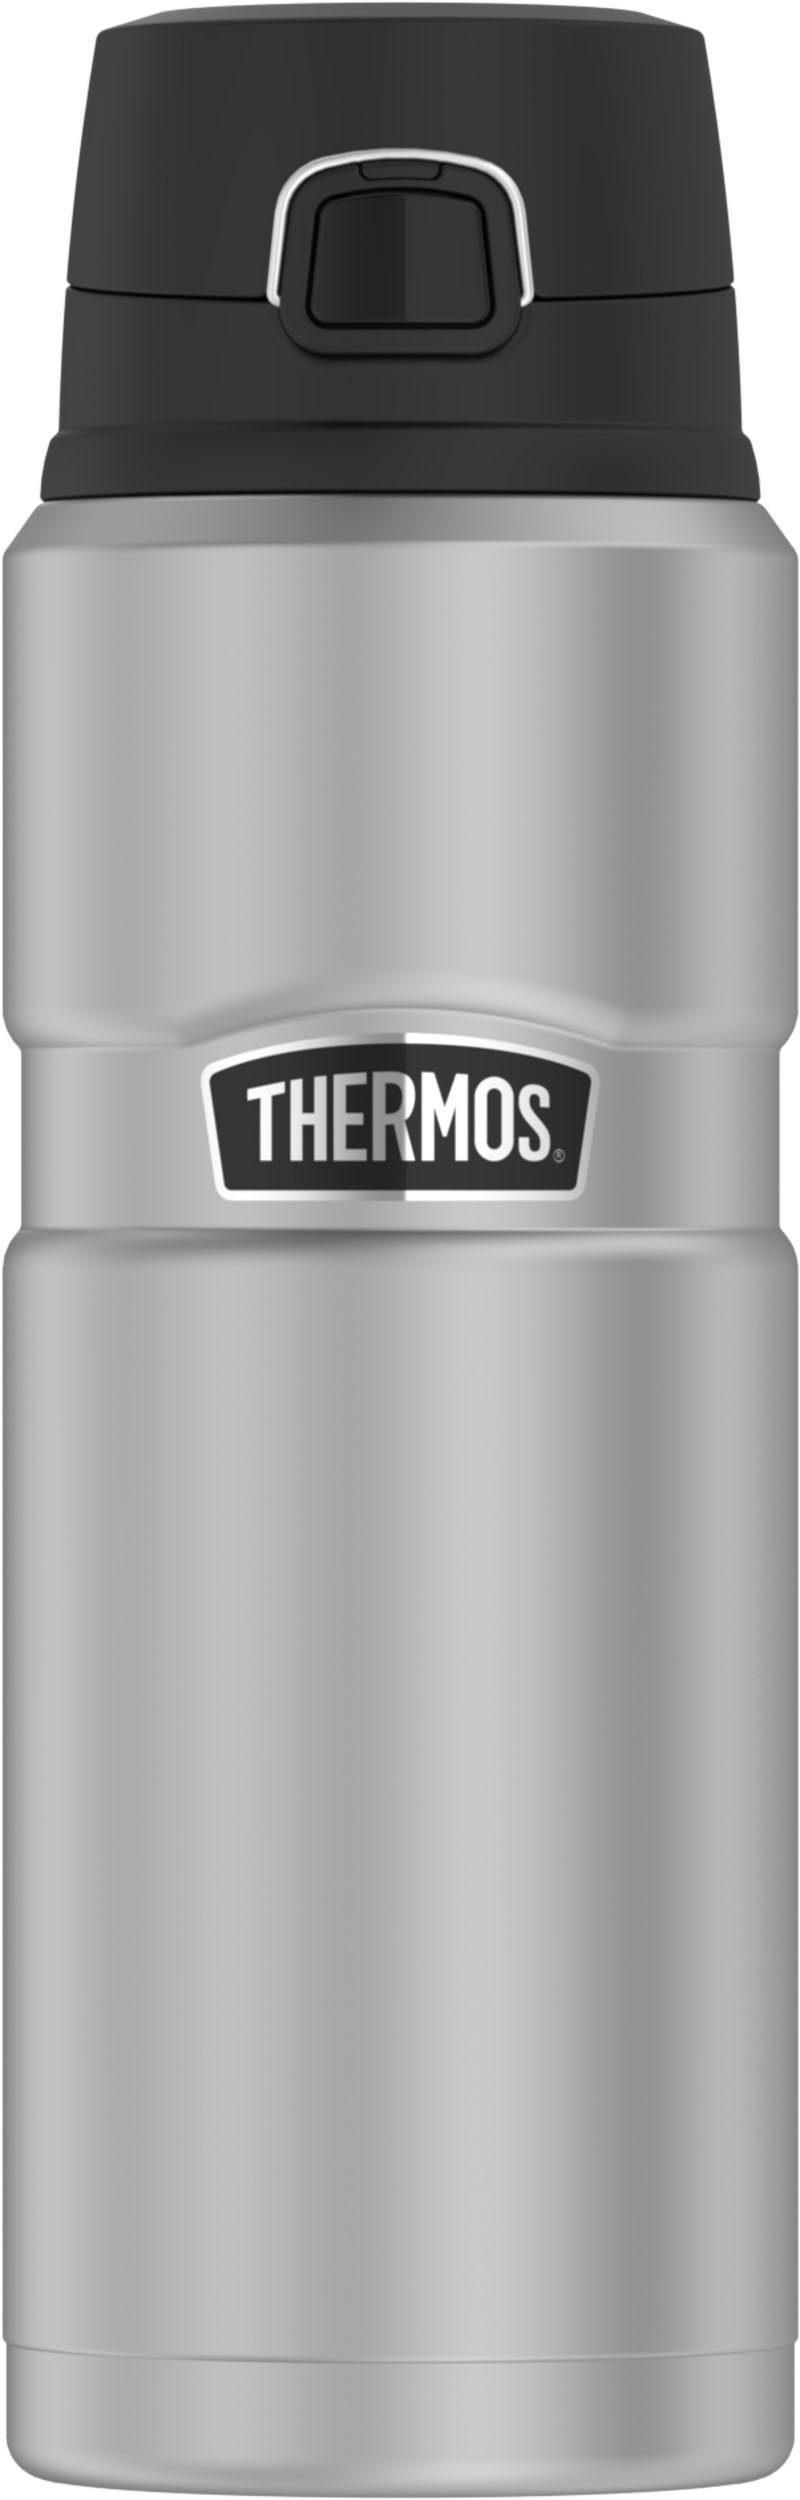 THERMOS Thermoflasche Stainless King, Edelstahl, 0,7 Liter silberfarben